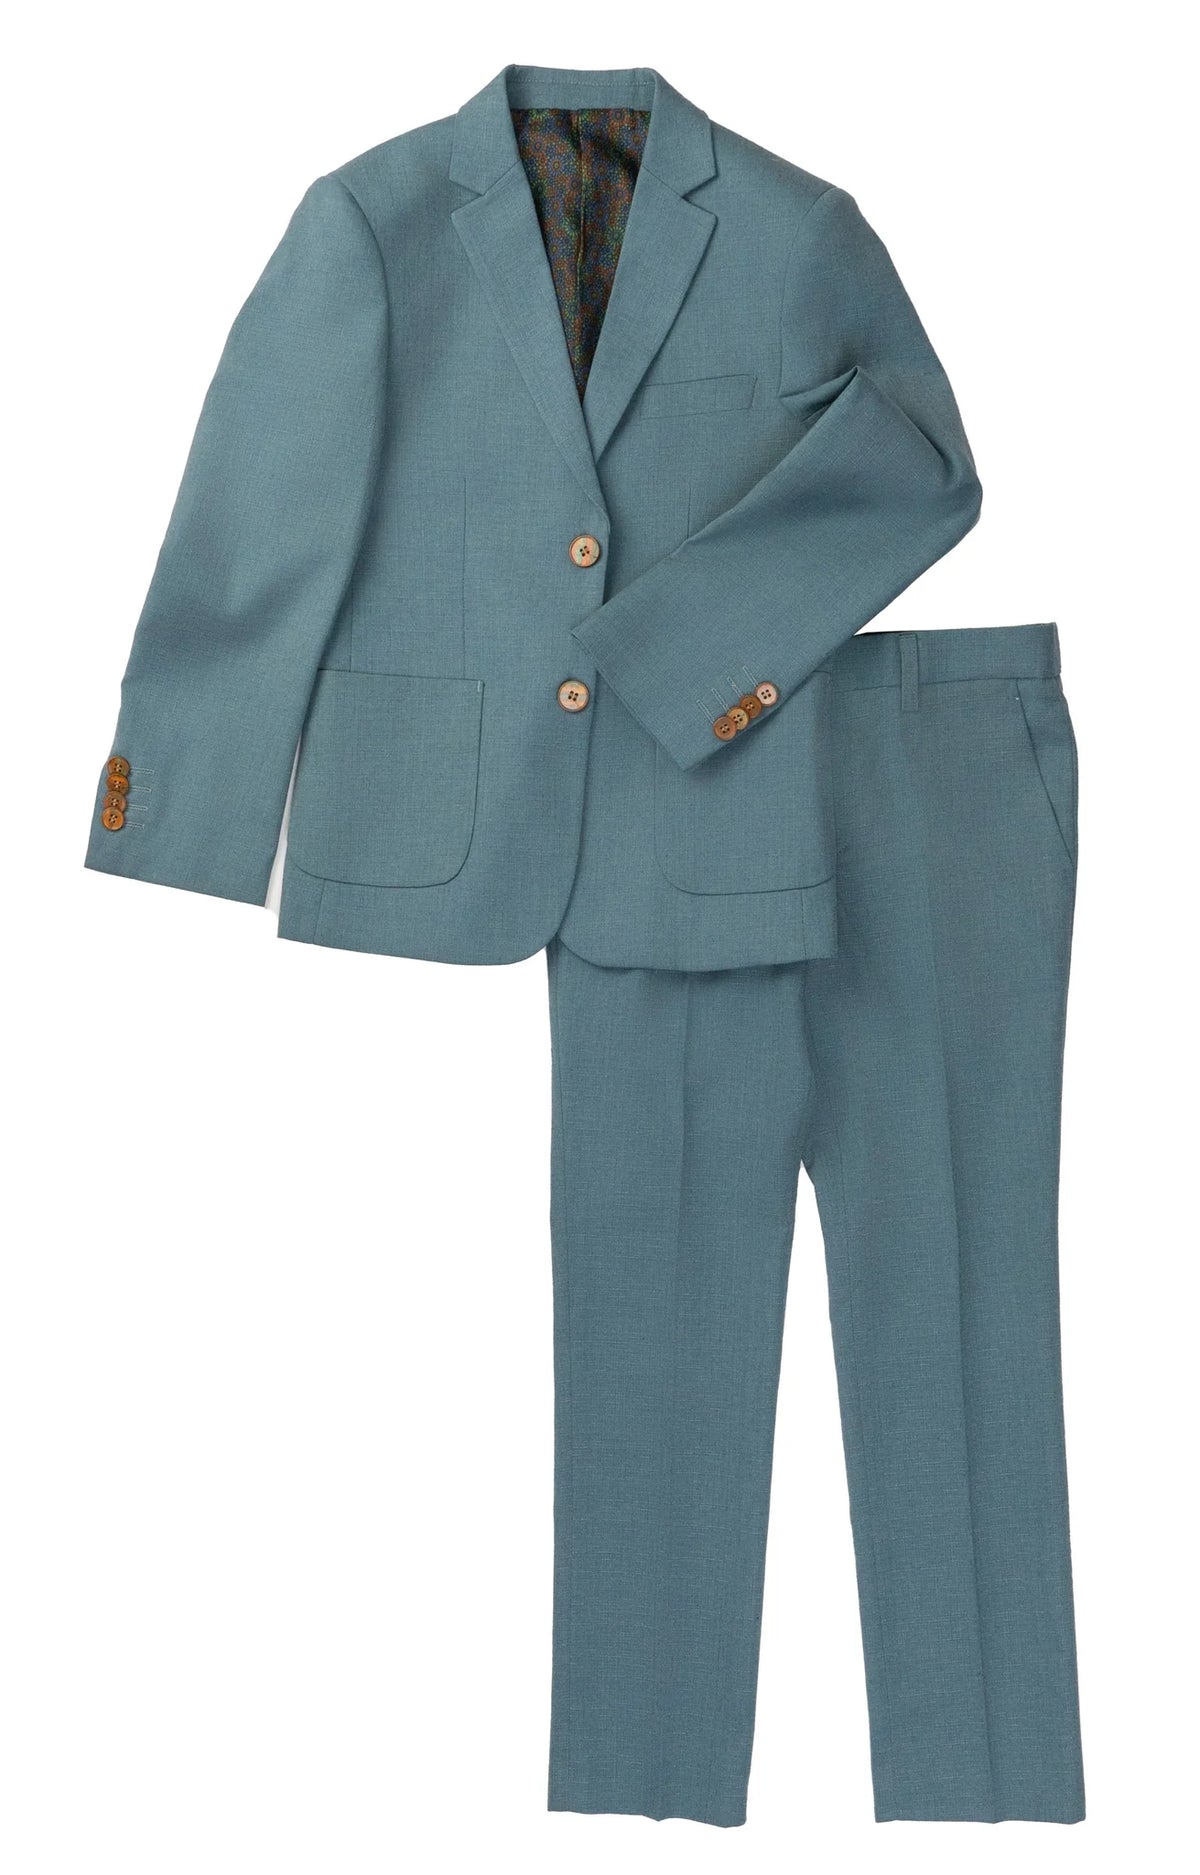 Isaac Mizrahi Boys Teal Blue Slim Fit 2 Piece Suit